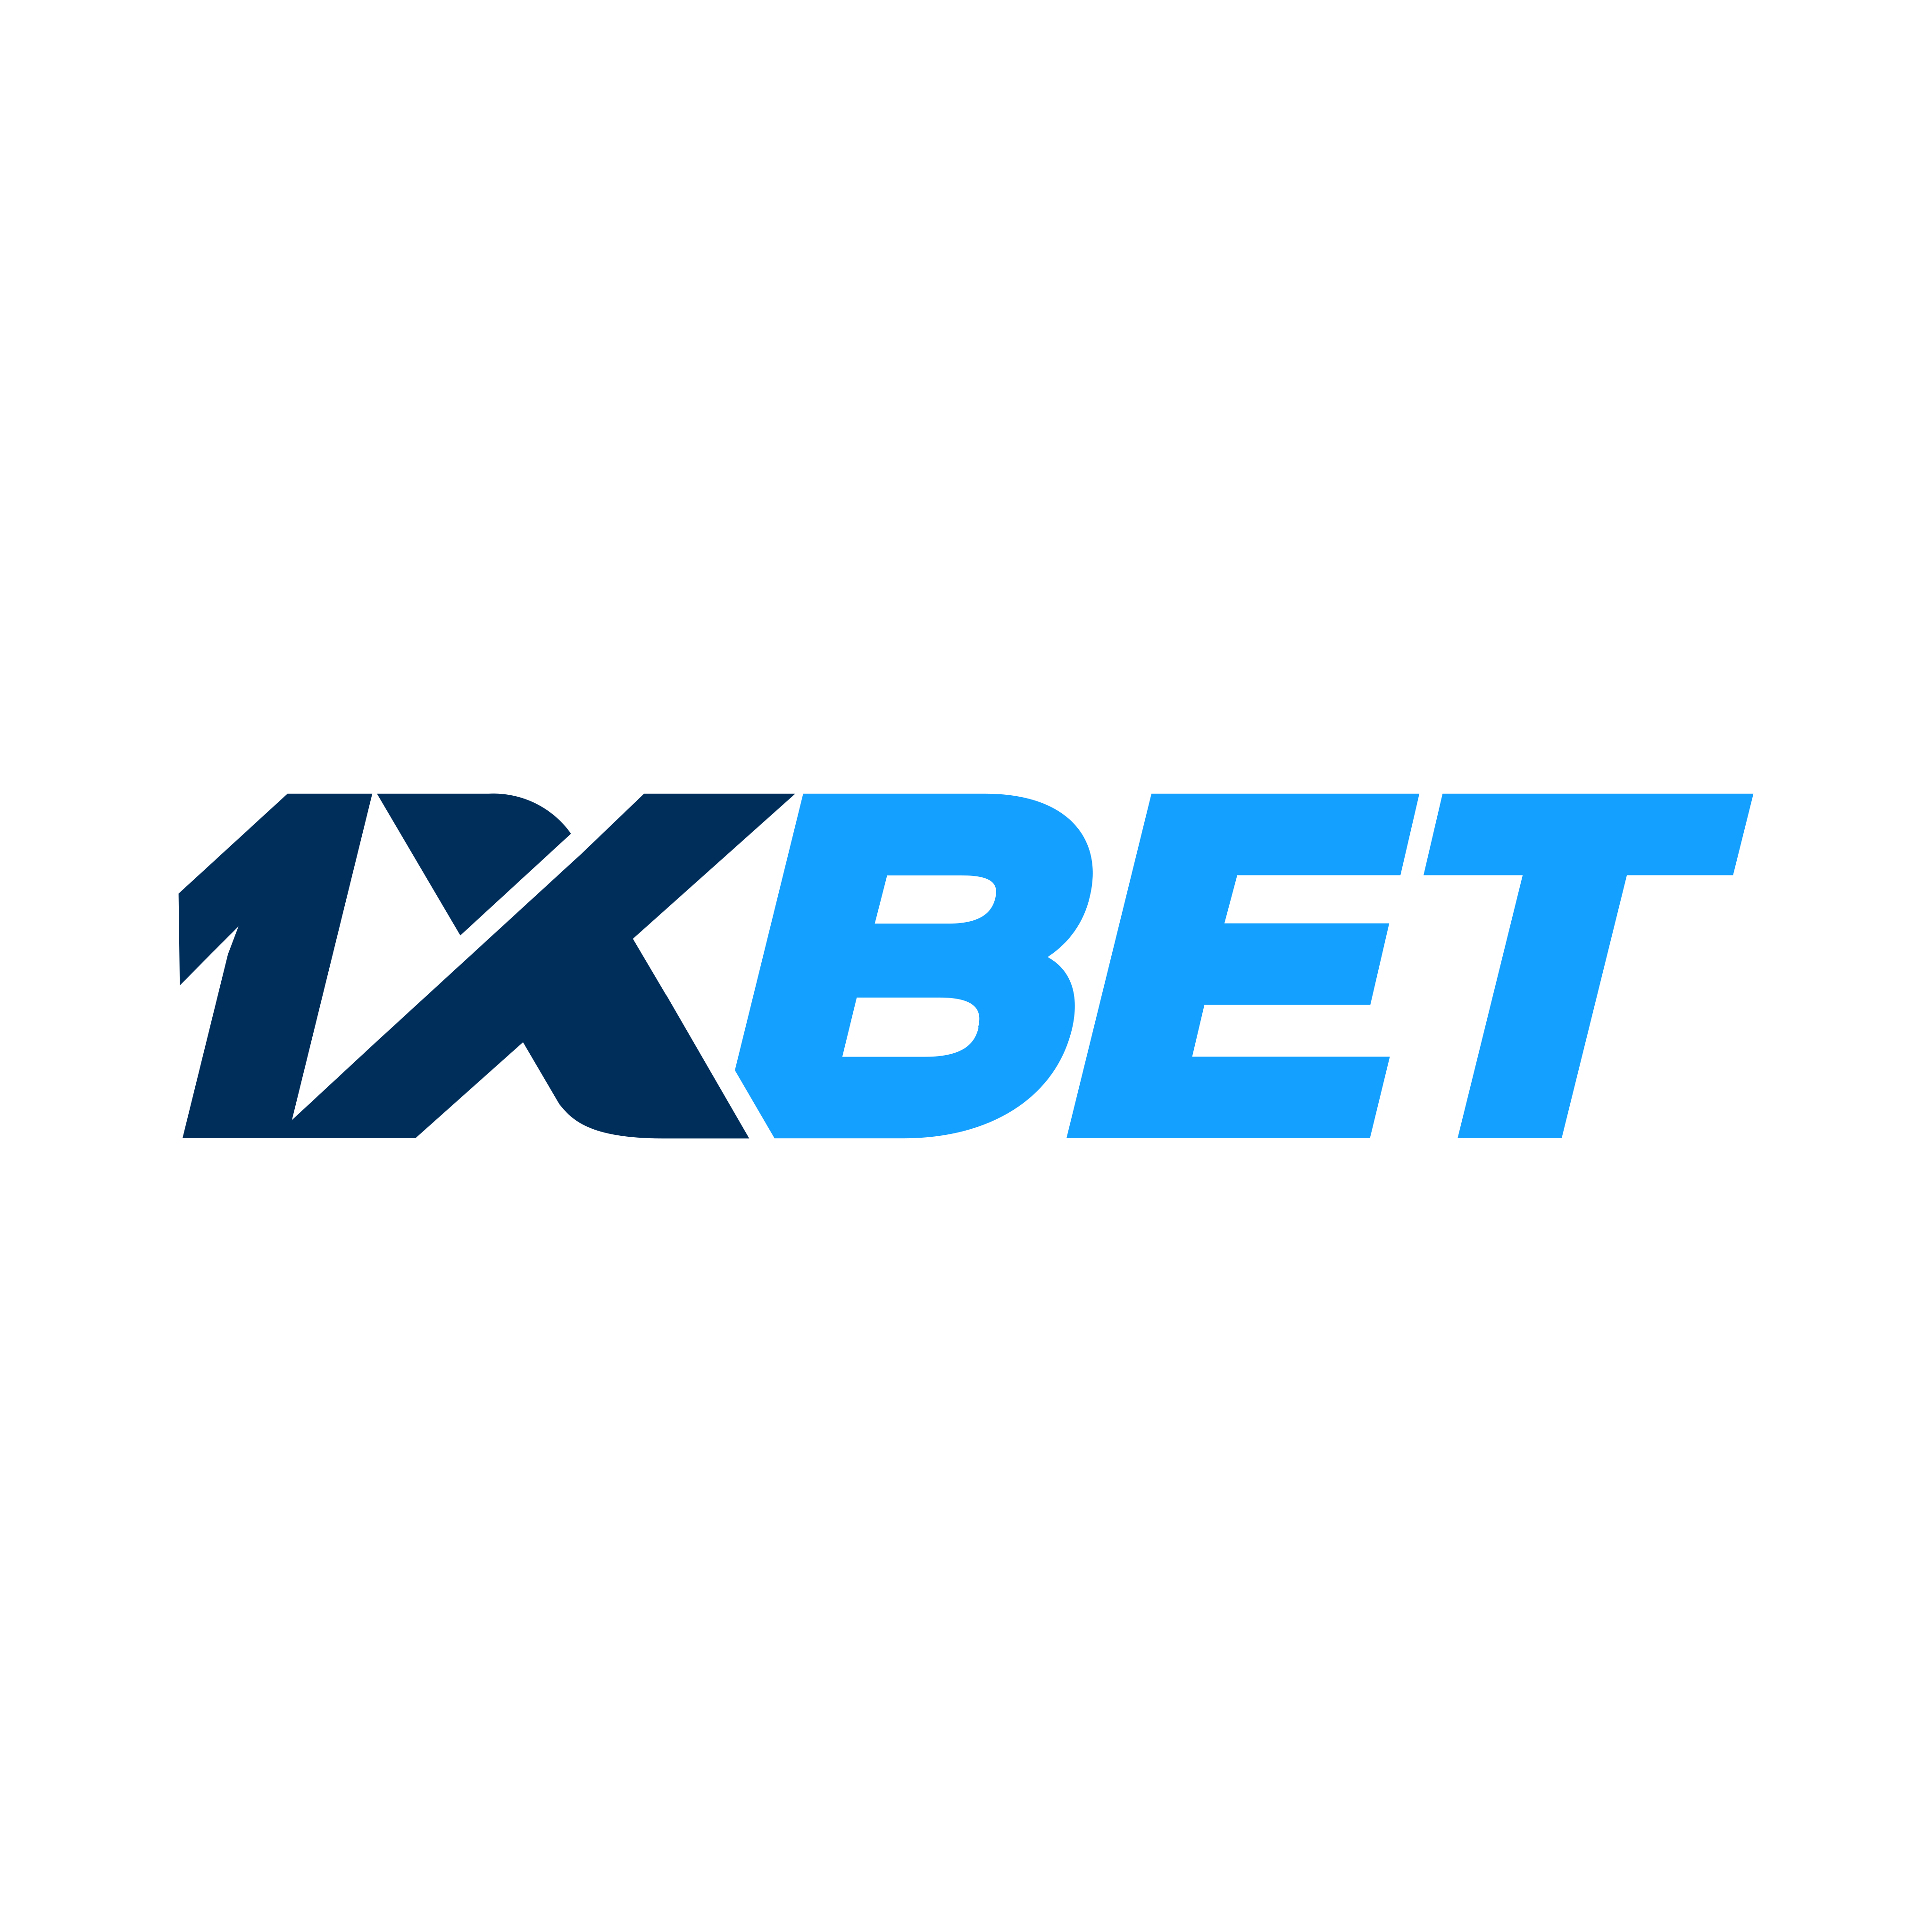 1xbet logo 0 - 1XBET Logo